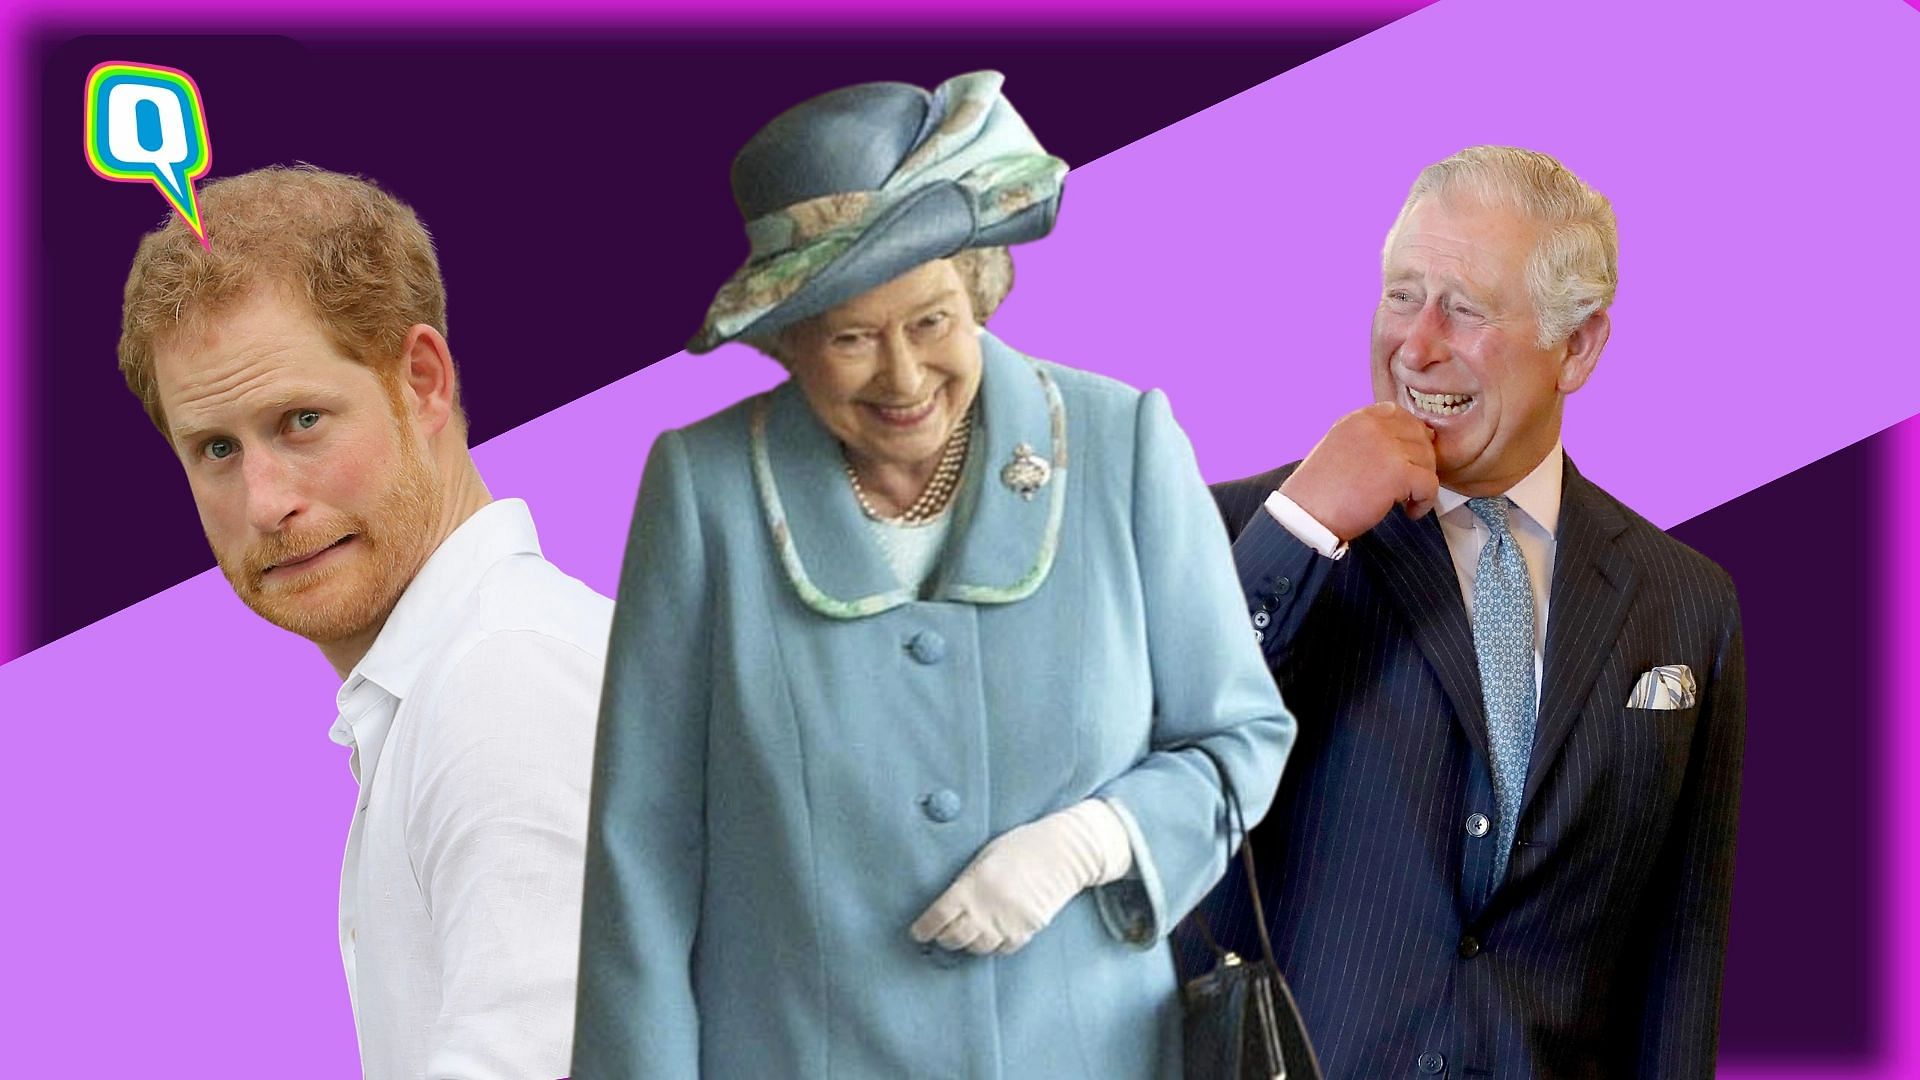 <div class="paragraphs"><p>Queen Elizabeth II's death has triggered memes on social media.&nbsp;&nbsp;</p></div>